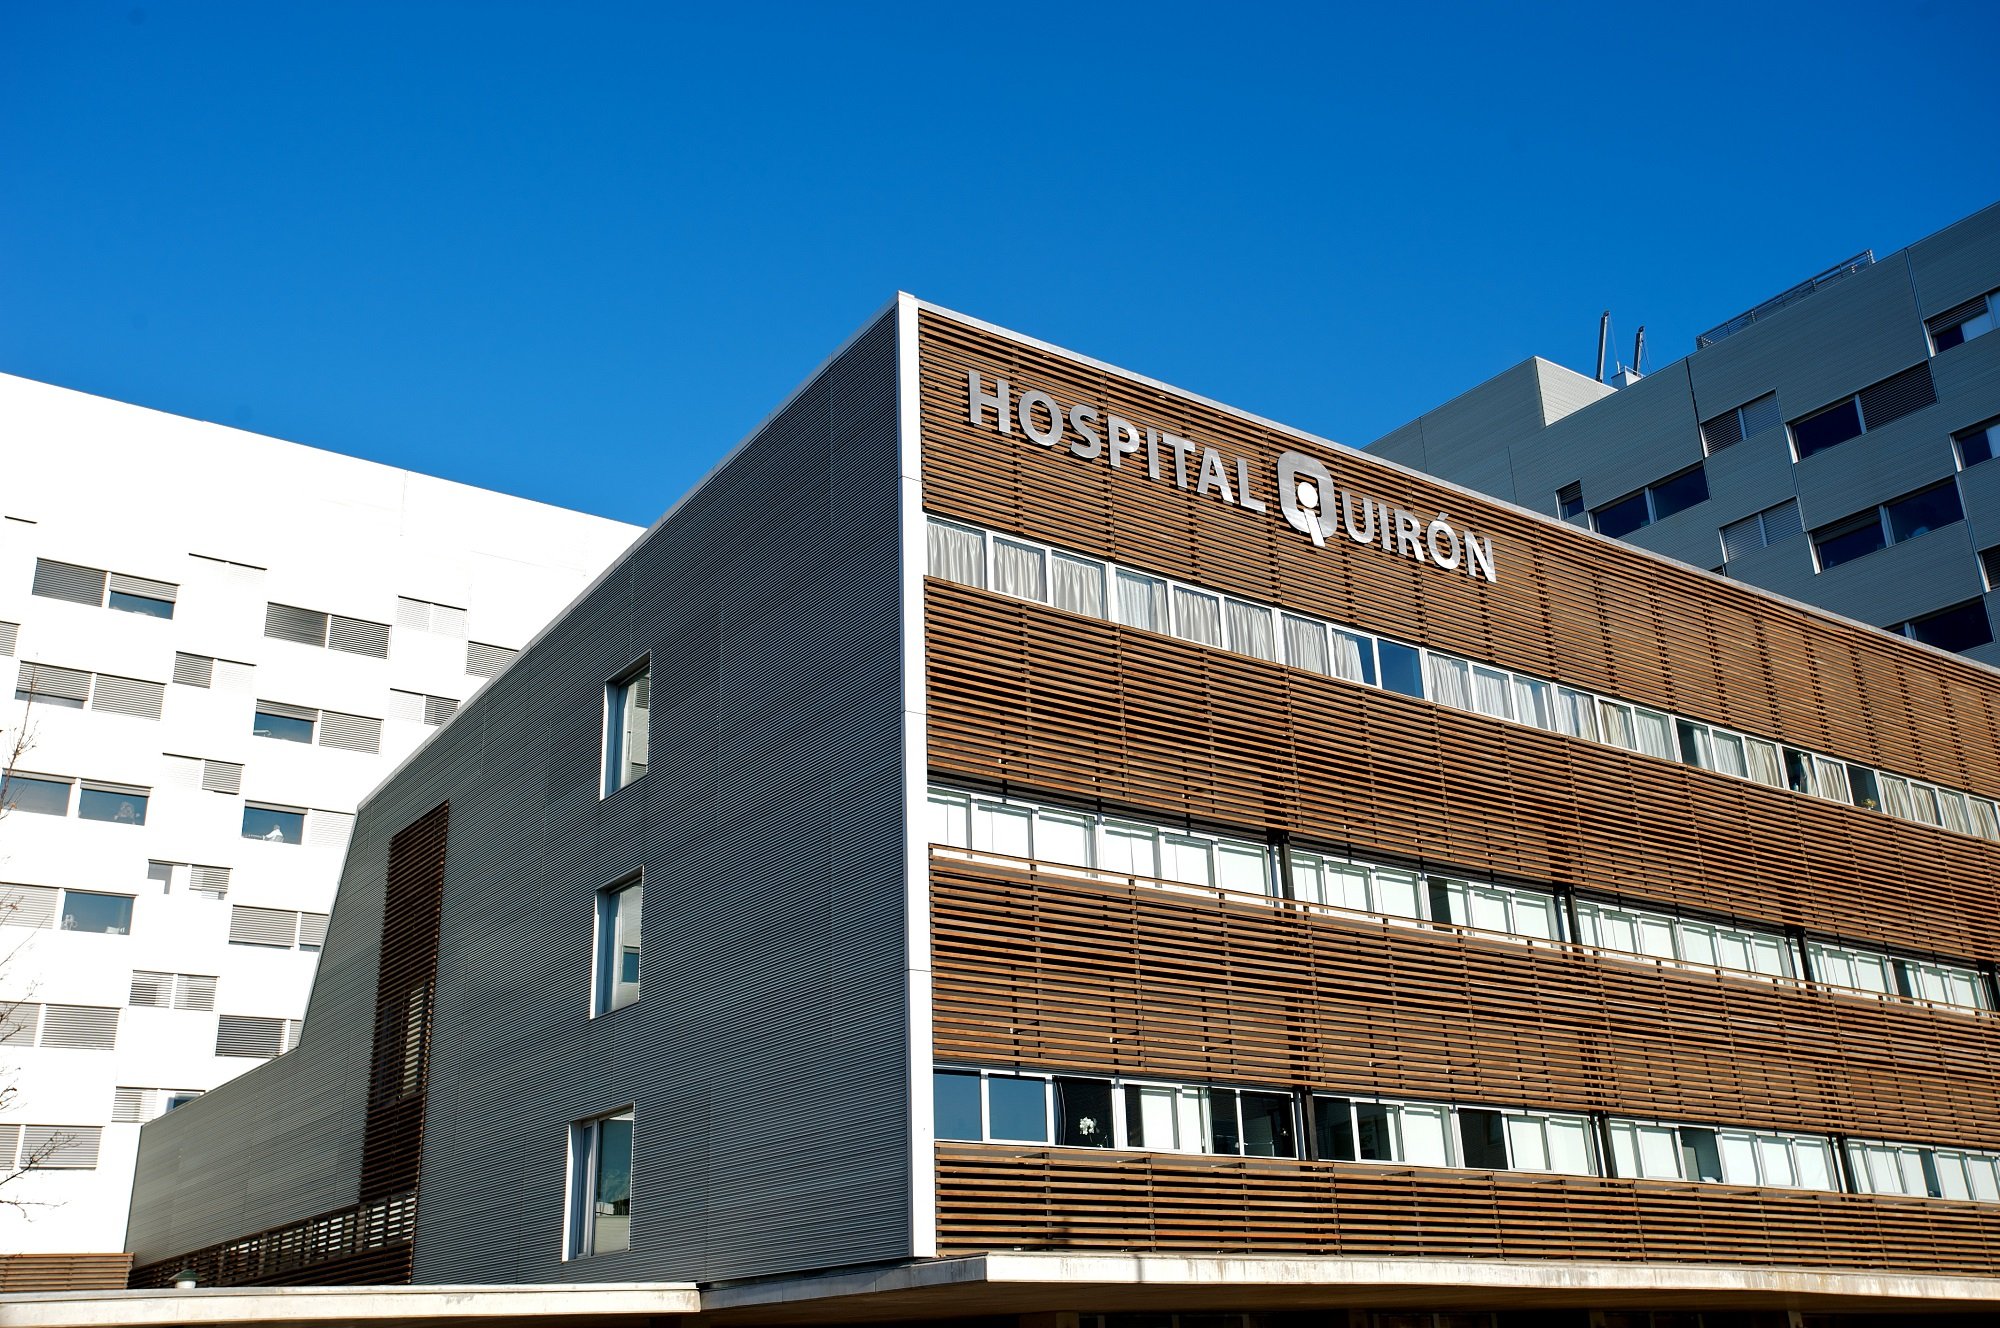 Muere por coronavirus el doctor Feixa, del Hospital Quironsalud de Barcelona